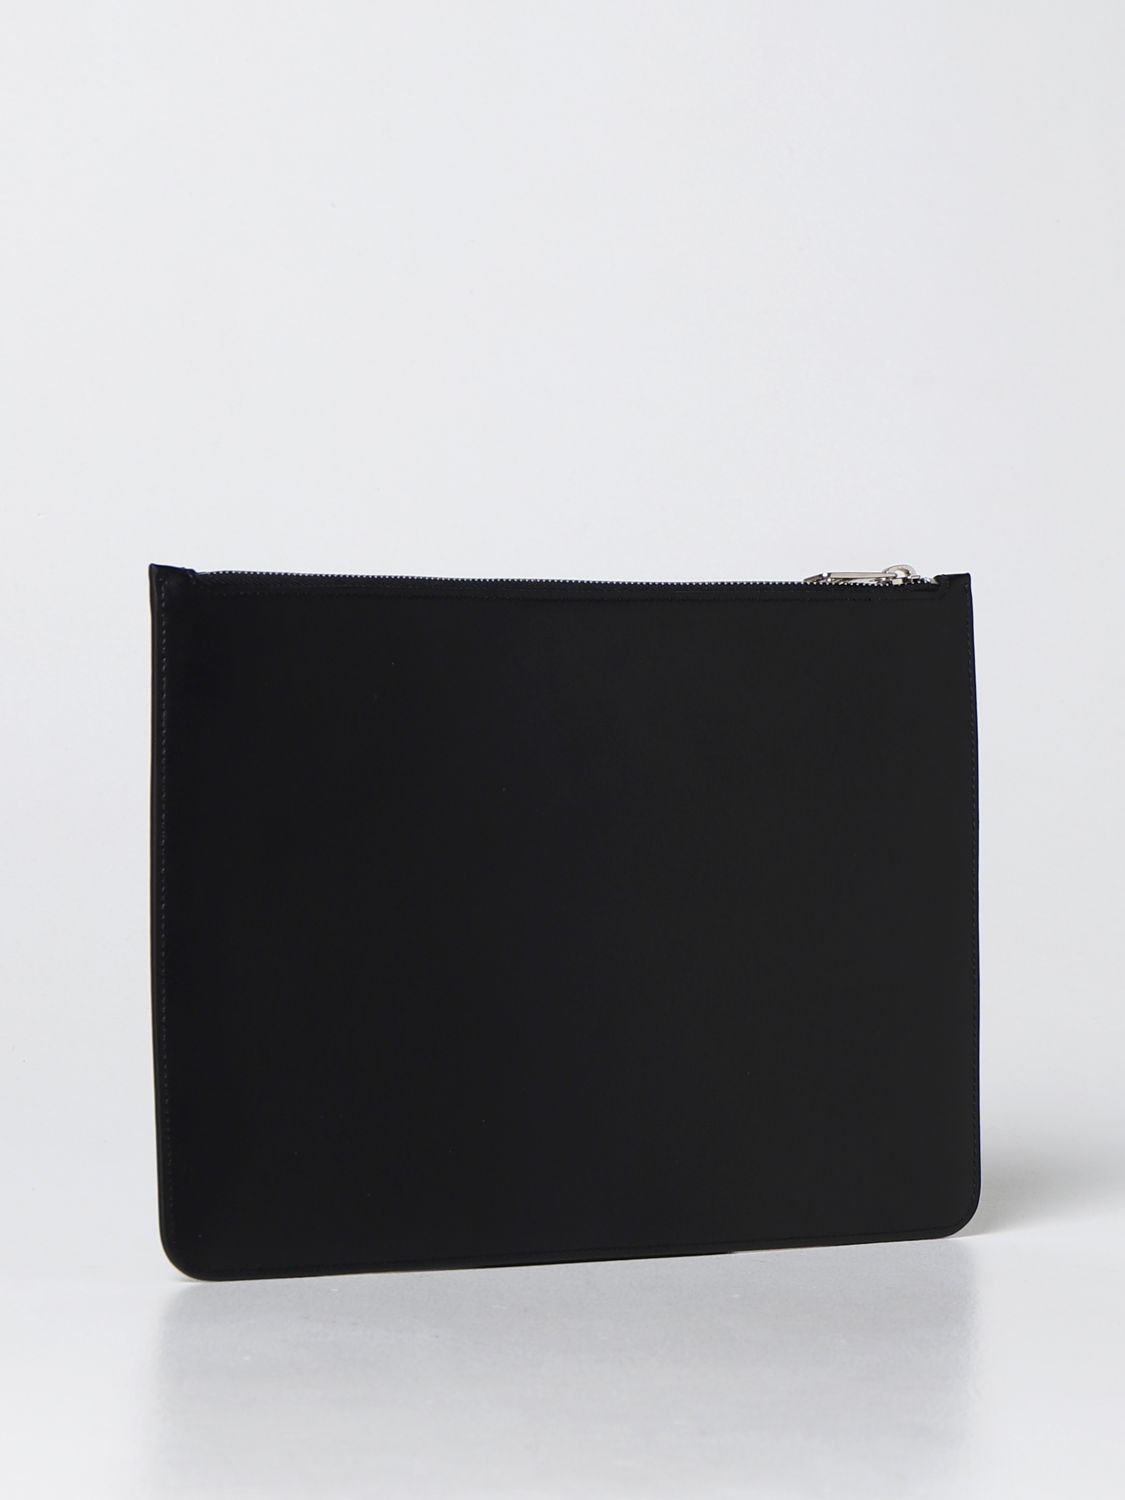 Briefcase Neil Barrett: Thunderbolt Neil Barrett leather pouch black 2